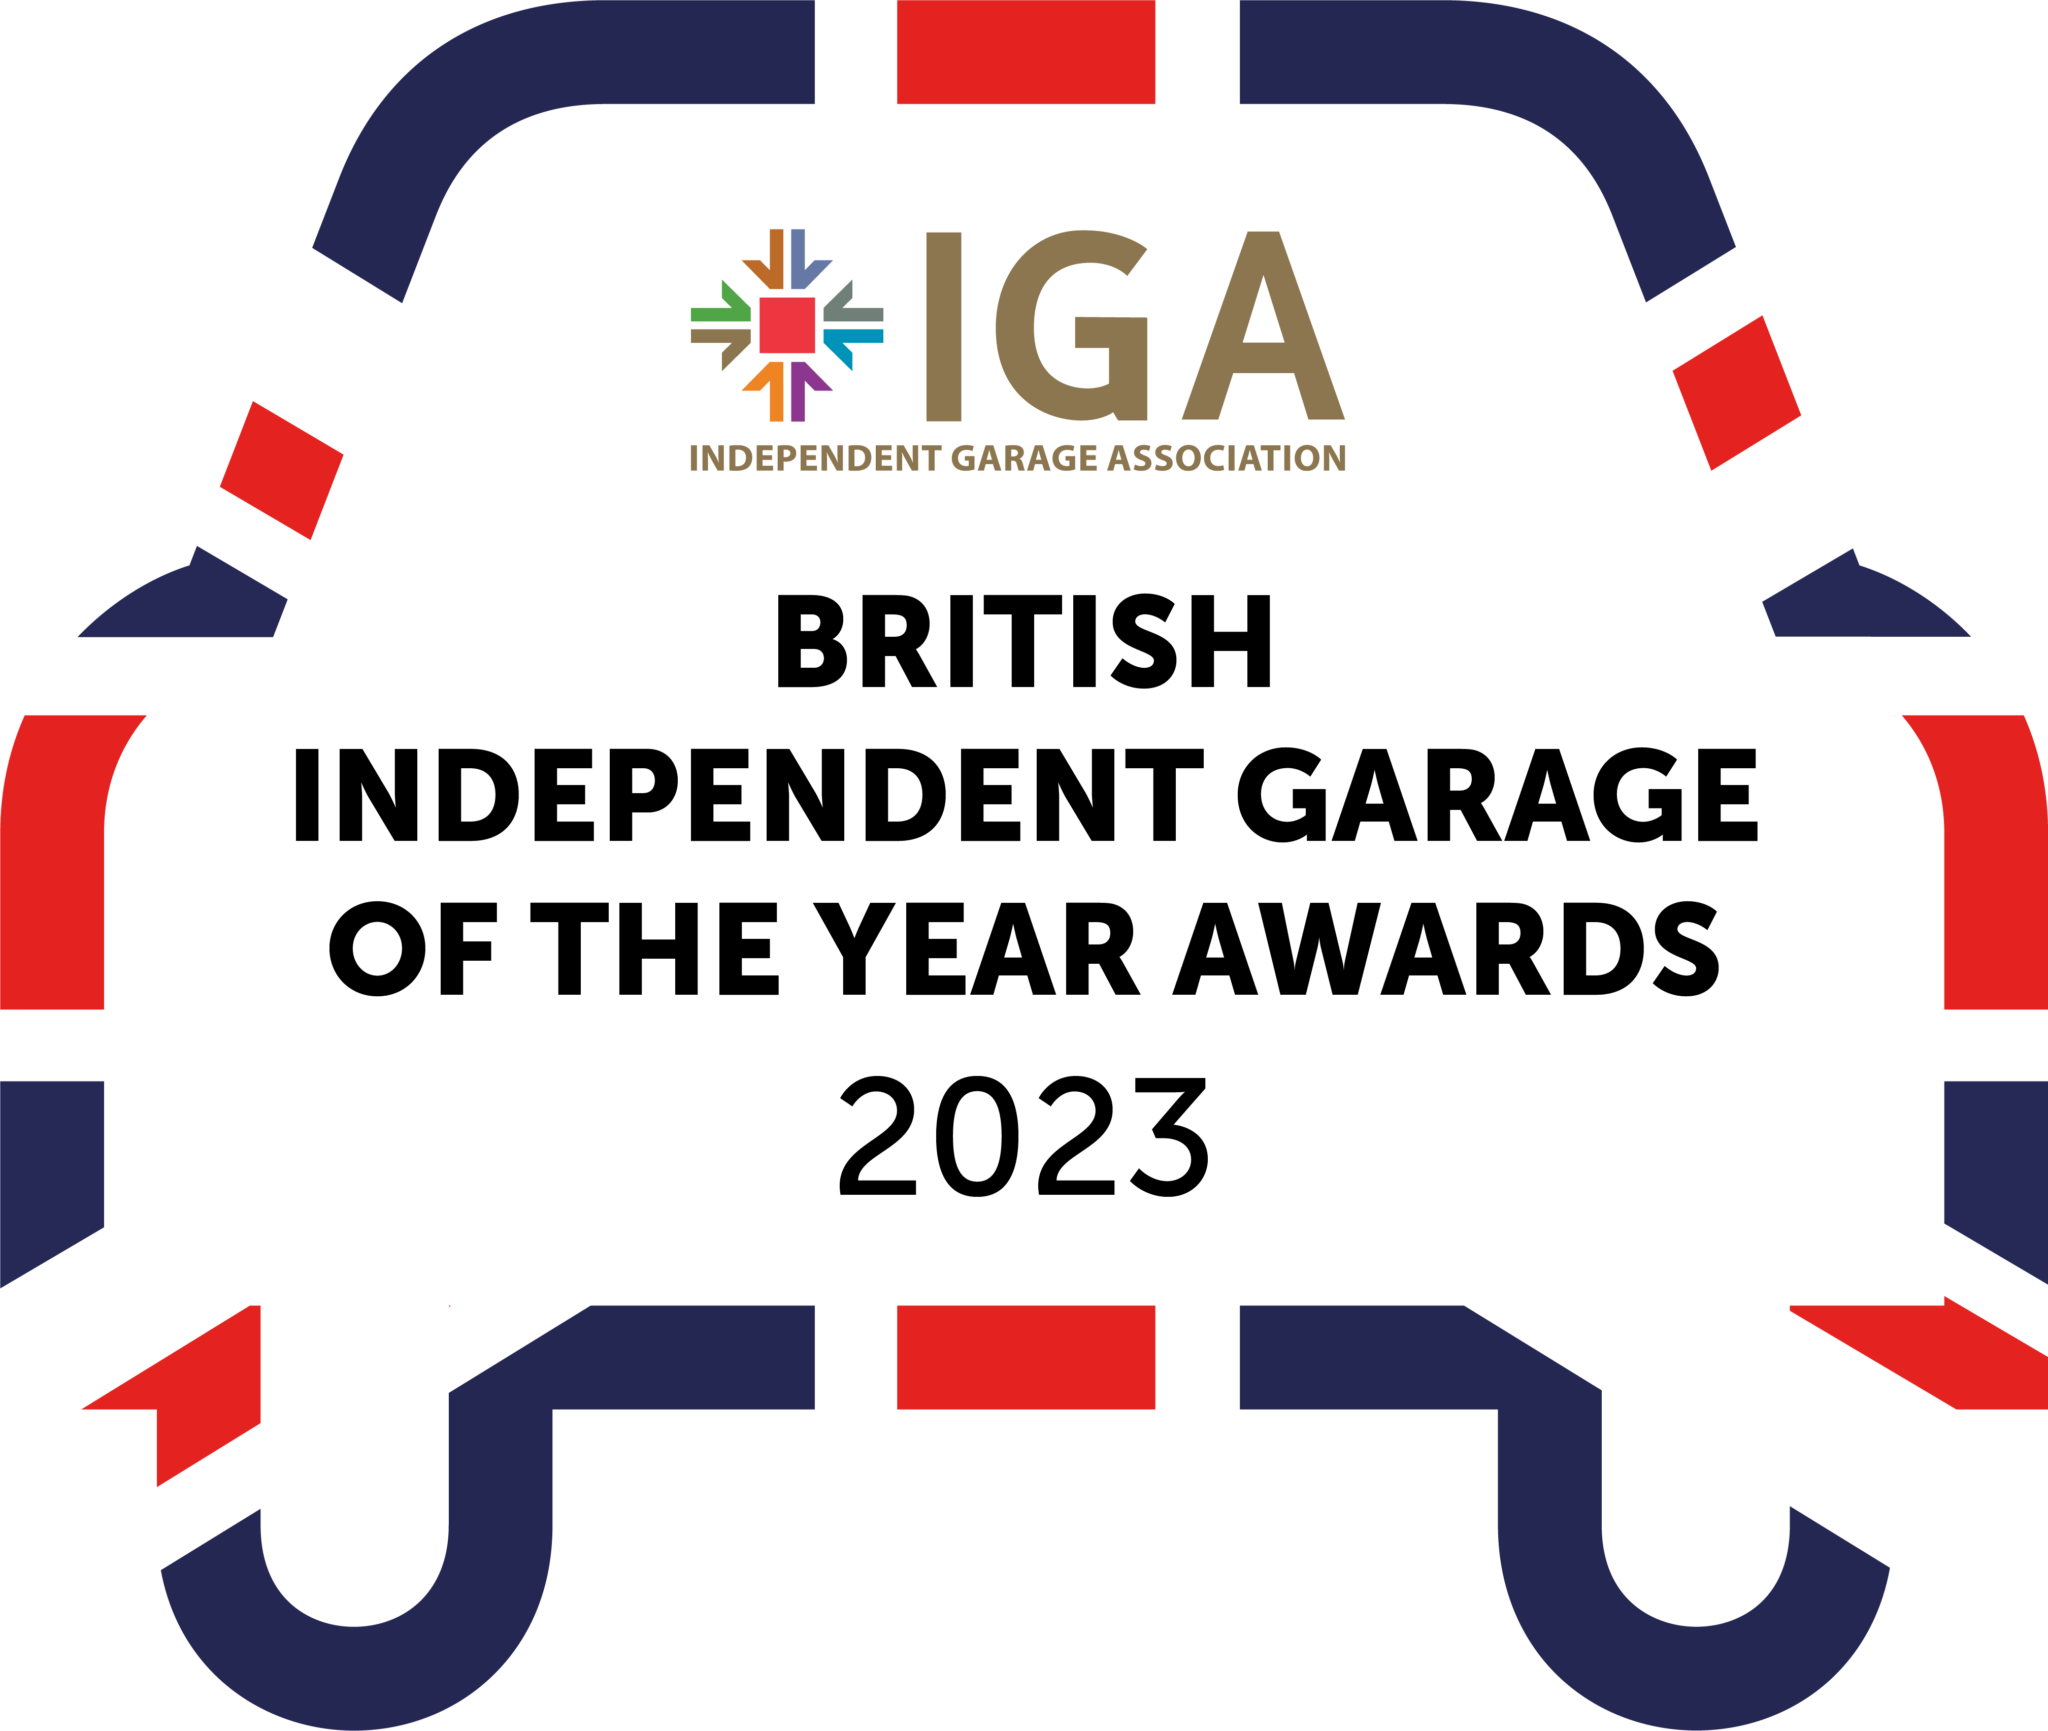 IGA BIG Awards Raises £10,000 for Automotive Charity Ben